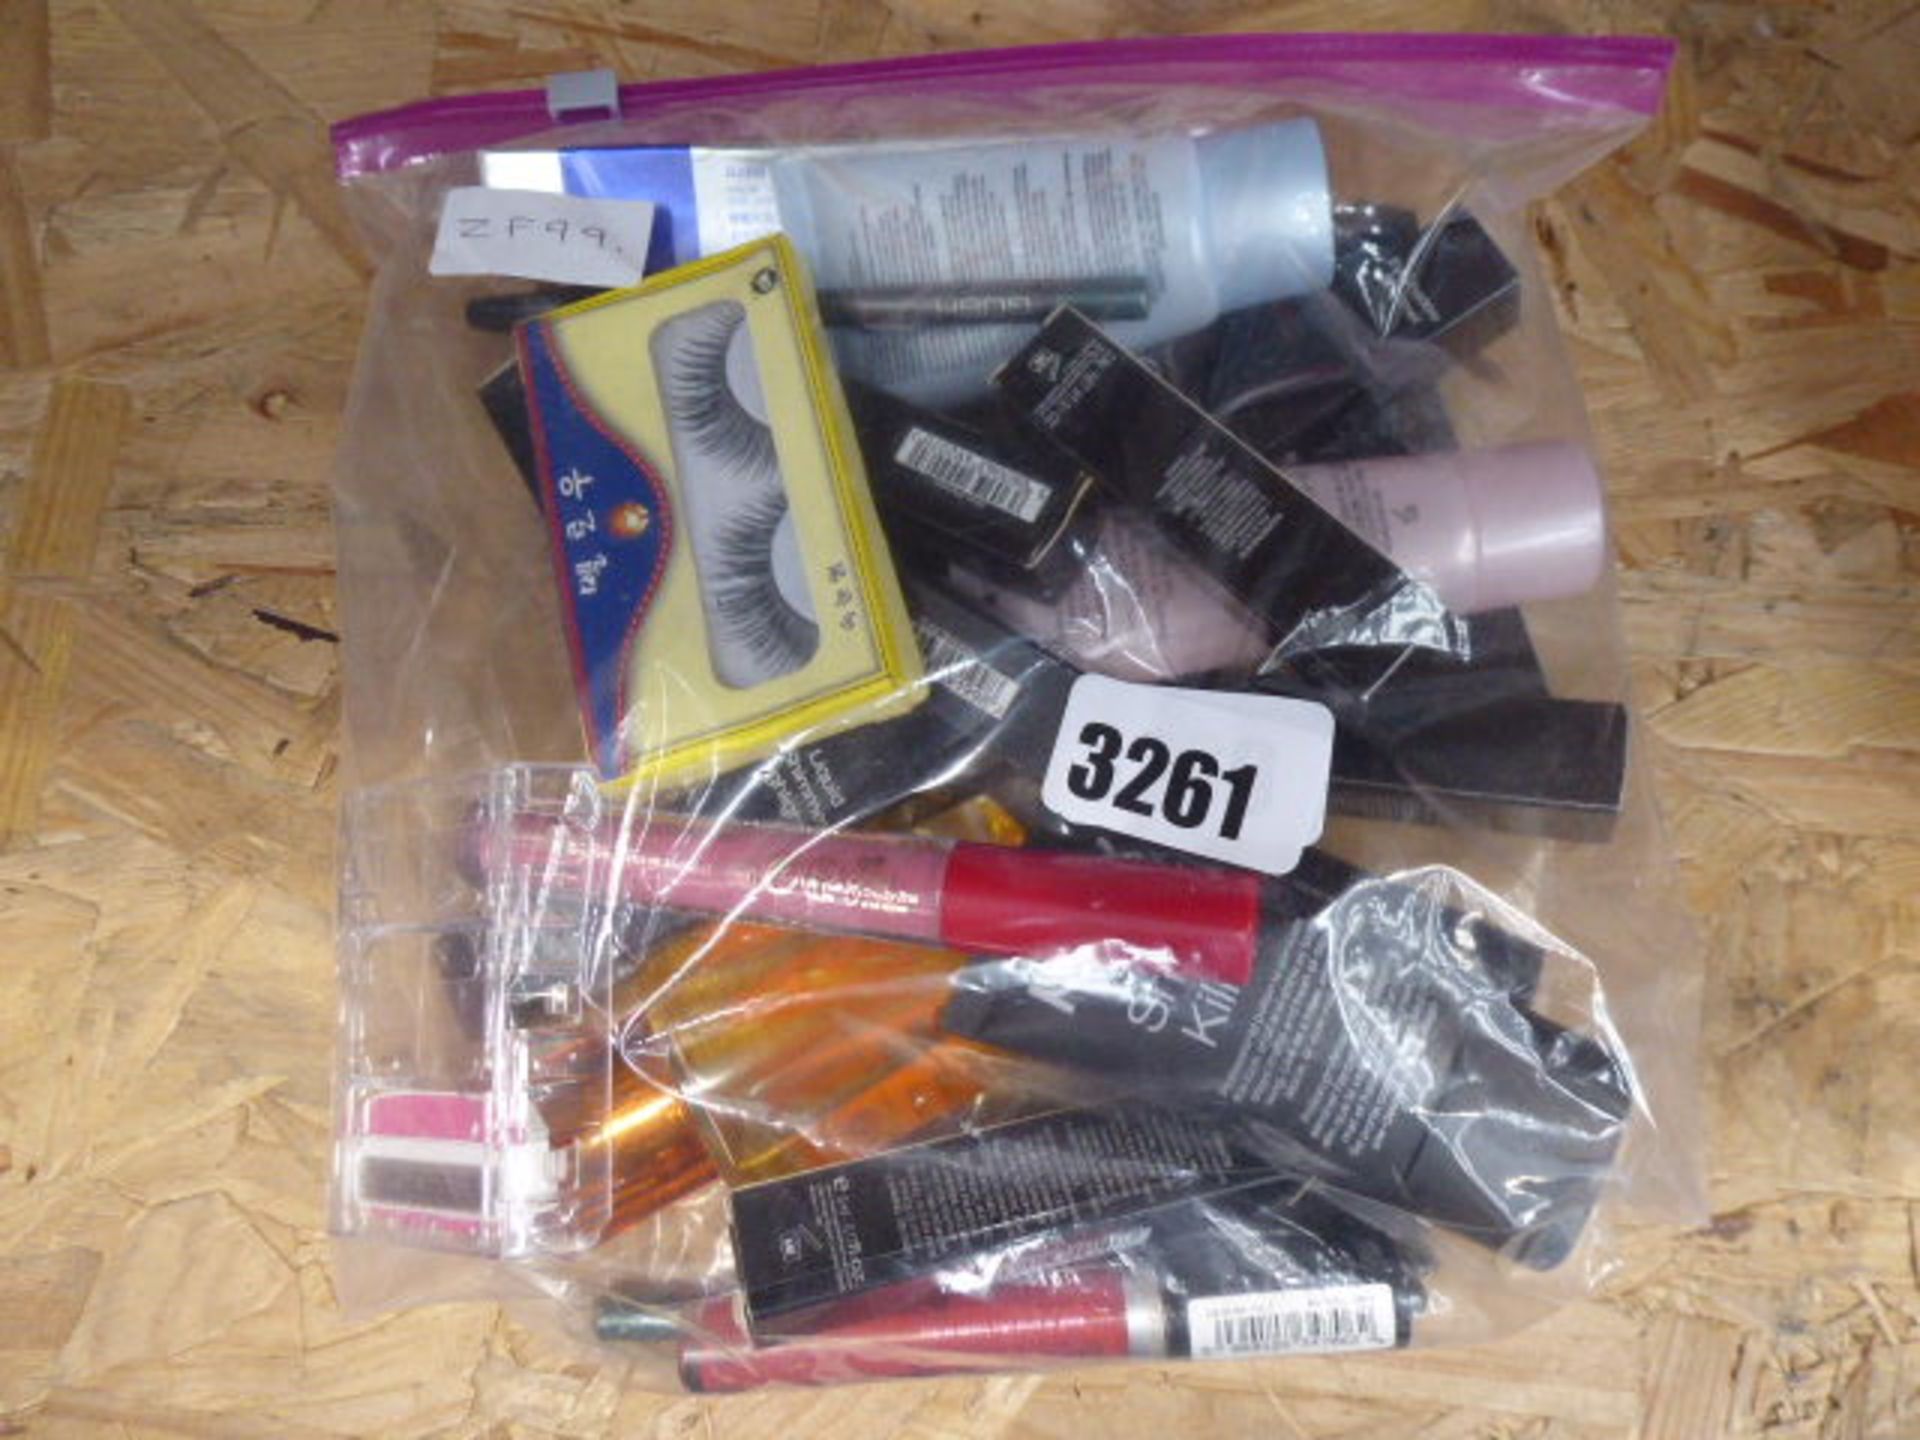 3269 Small bag of makeup brushes, fake eyelashes, eye creams etc.